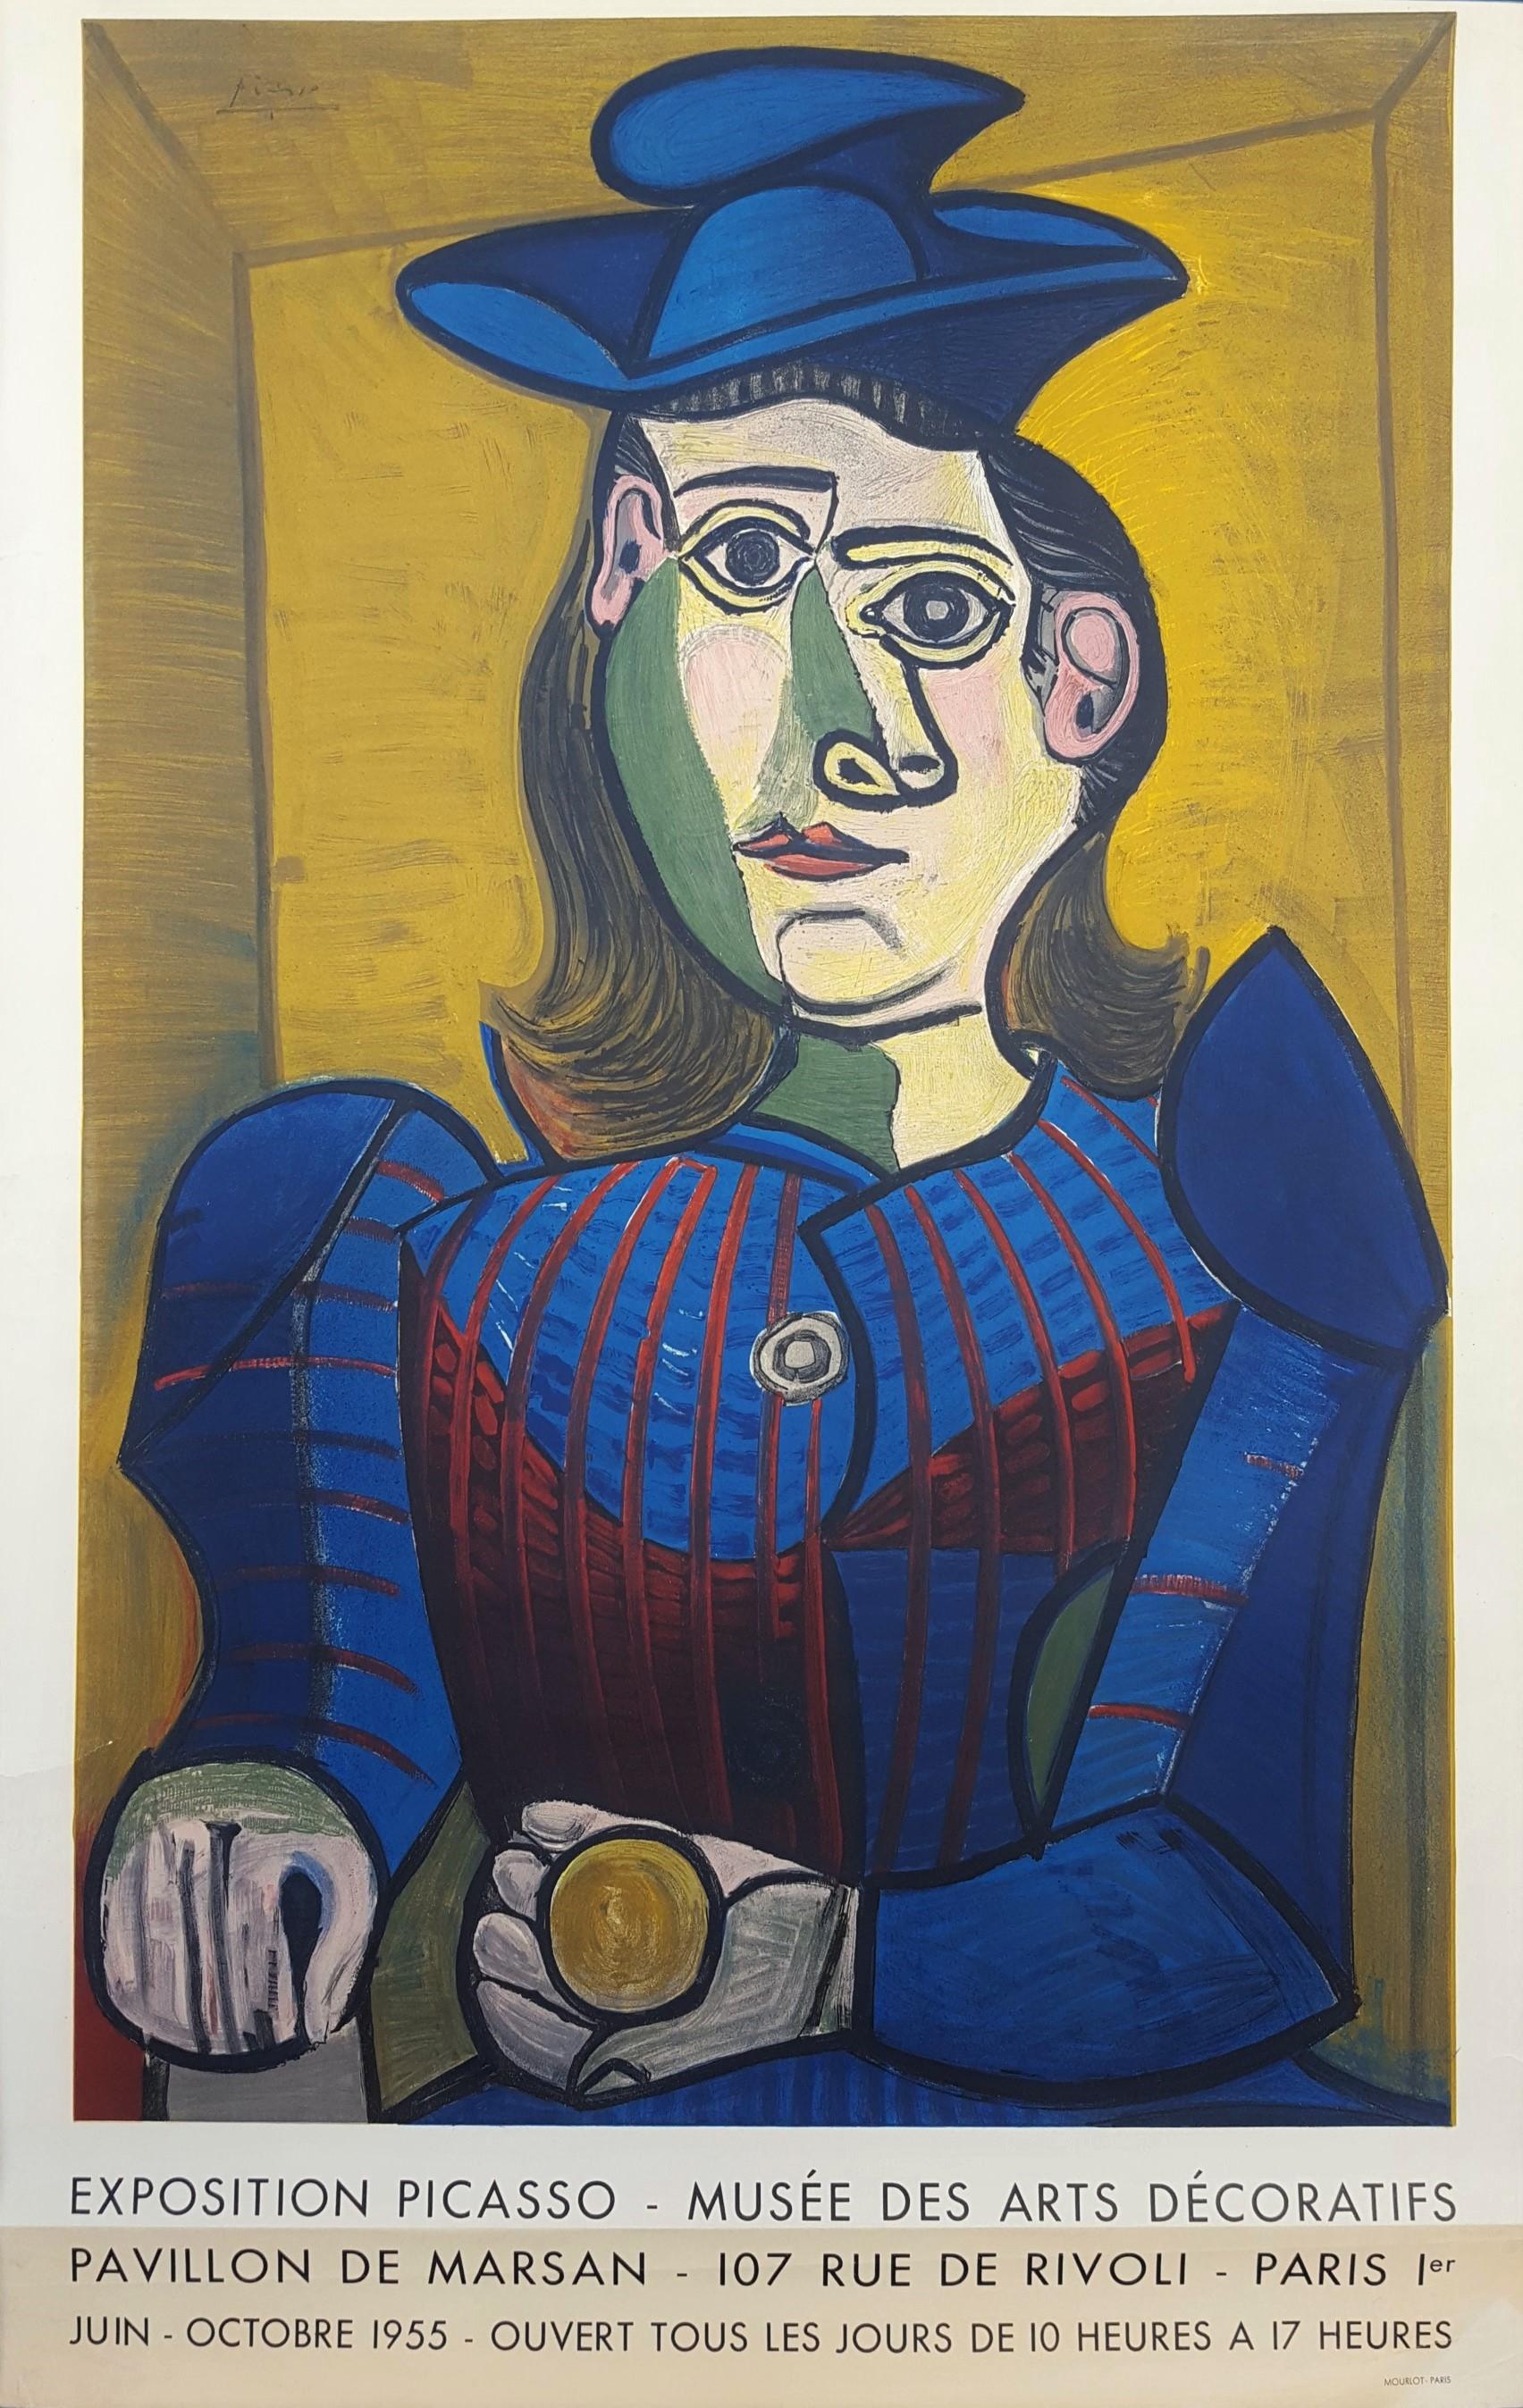 (after) Pablo Picasso Portrait Print – Dora Maar (Femme Assise)